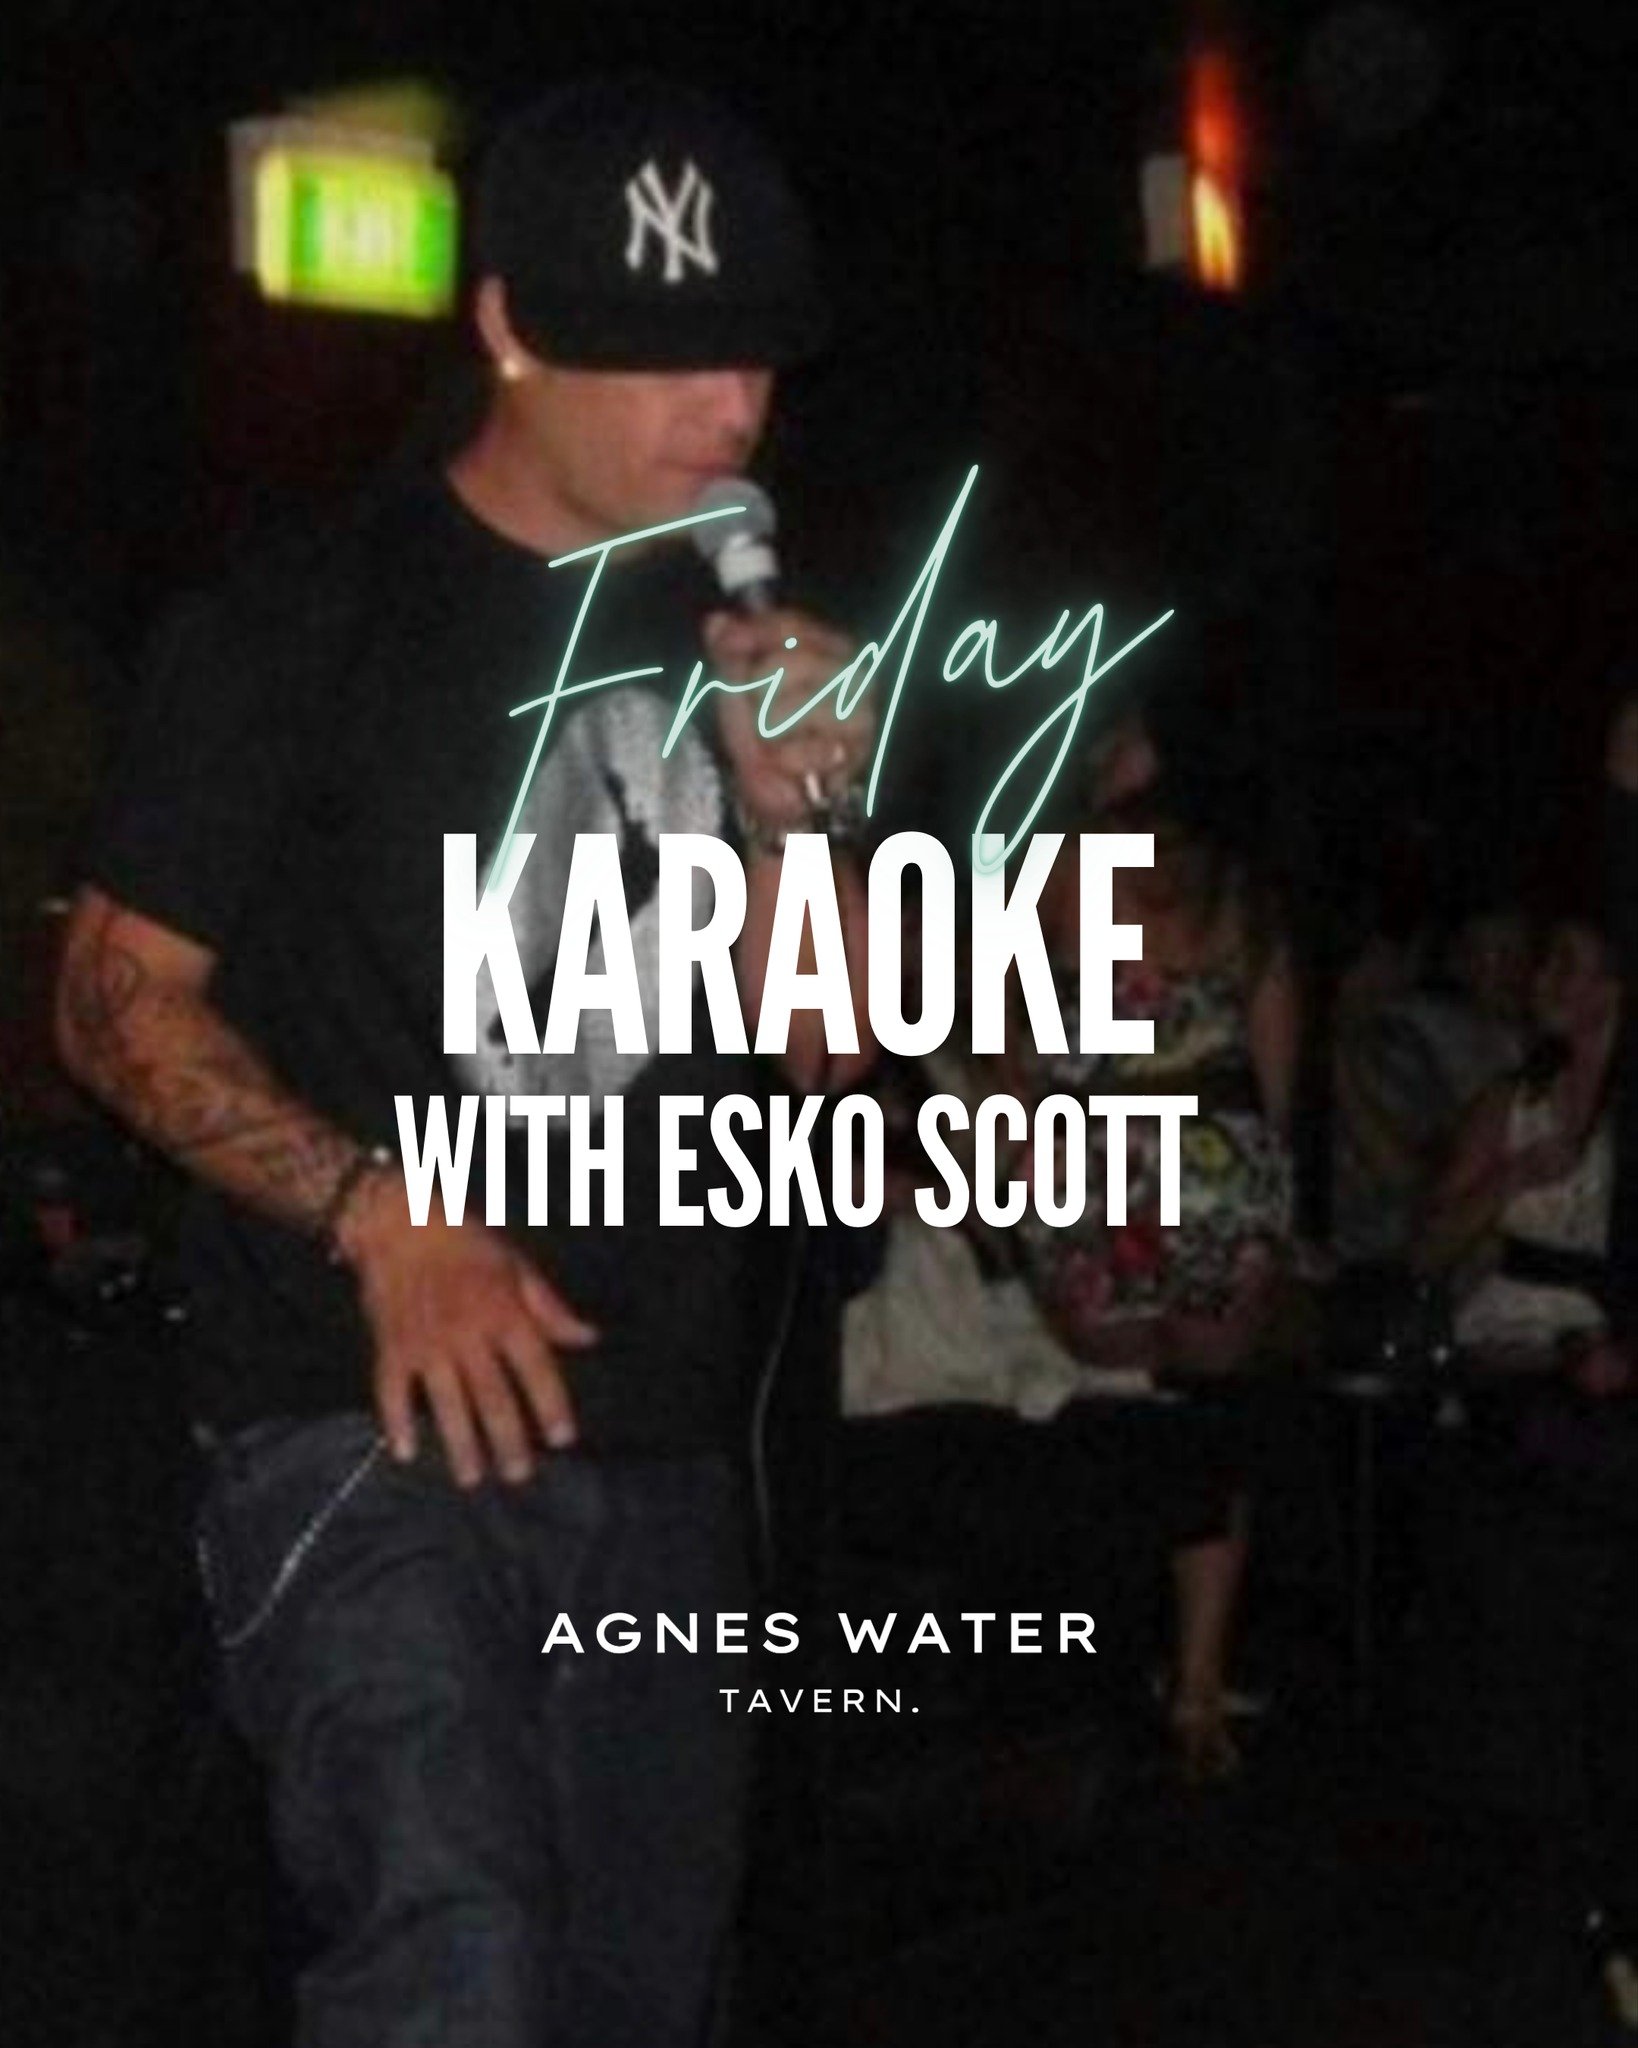 🎵 𝗧𝗵𝗶𝘀 𝗪𝗲𝗲𝗸𝗲𝗻𝗱'𝘀 𝗟𝗶𝘃𝗲 𝗠𝘂𝘀𝗶𝗰 𝗟𝗶𝗻𝗲-𝗨𝗽 𝗮𝘁 𝗔𝗴𝗻𝗲𝘀 𝗪𝗮𝘁𝗲𝗿 𝗧𝗮𝘃𝗲𝗿𝗻 🎵

Get ready for another unforgettable weekend of live music:

🎤 𝗙𝗿𝗶𝗱𝗮𝘆: 𝟴𝗽𝗺 - Esko Scott - ⚡️ KARAOKE!!
🎤 𝗦𝗮𝘁𝘂𝗿𝗱𝗮𝘆: 𝟴𝗽𝗺 - 